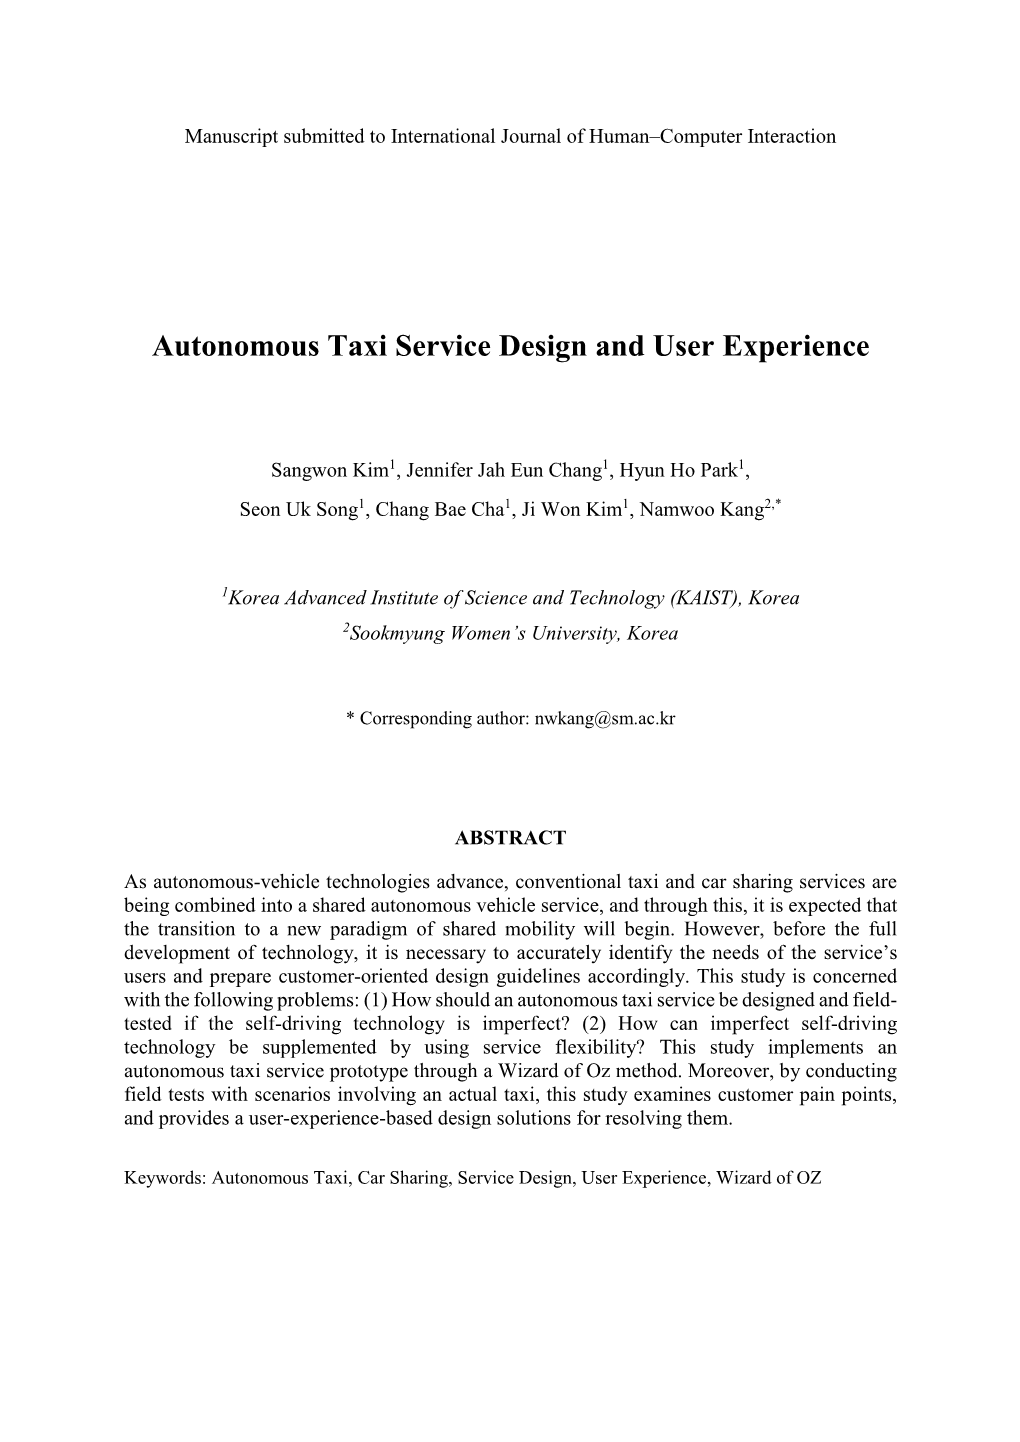 Autonomous Taxi Service Design and User Experience